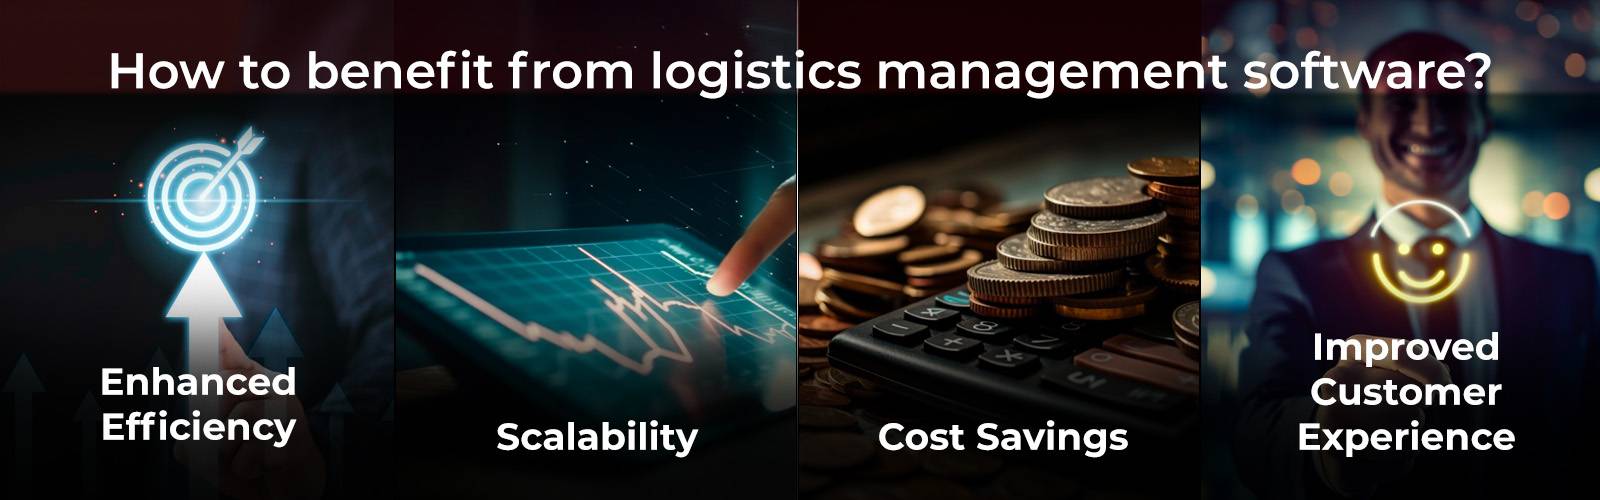 Benefits offered using logistics management software